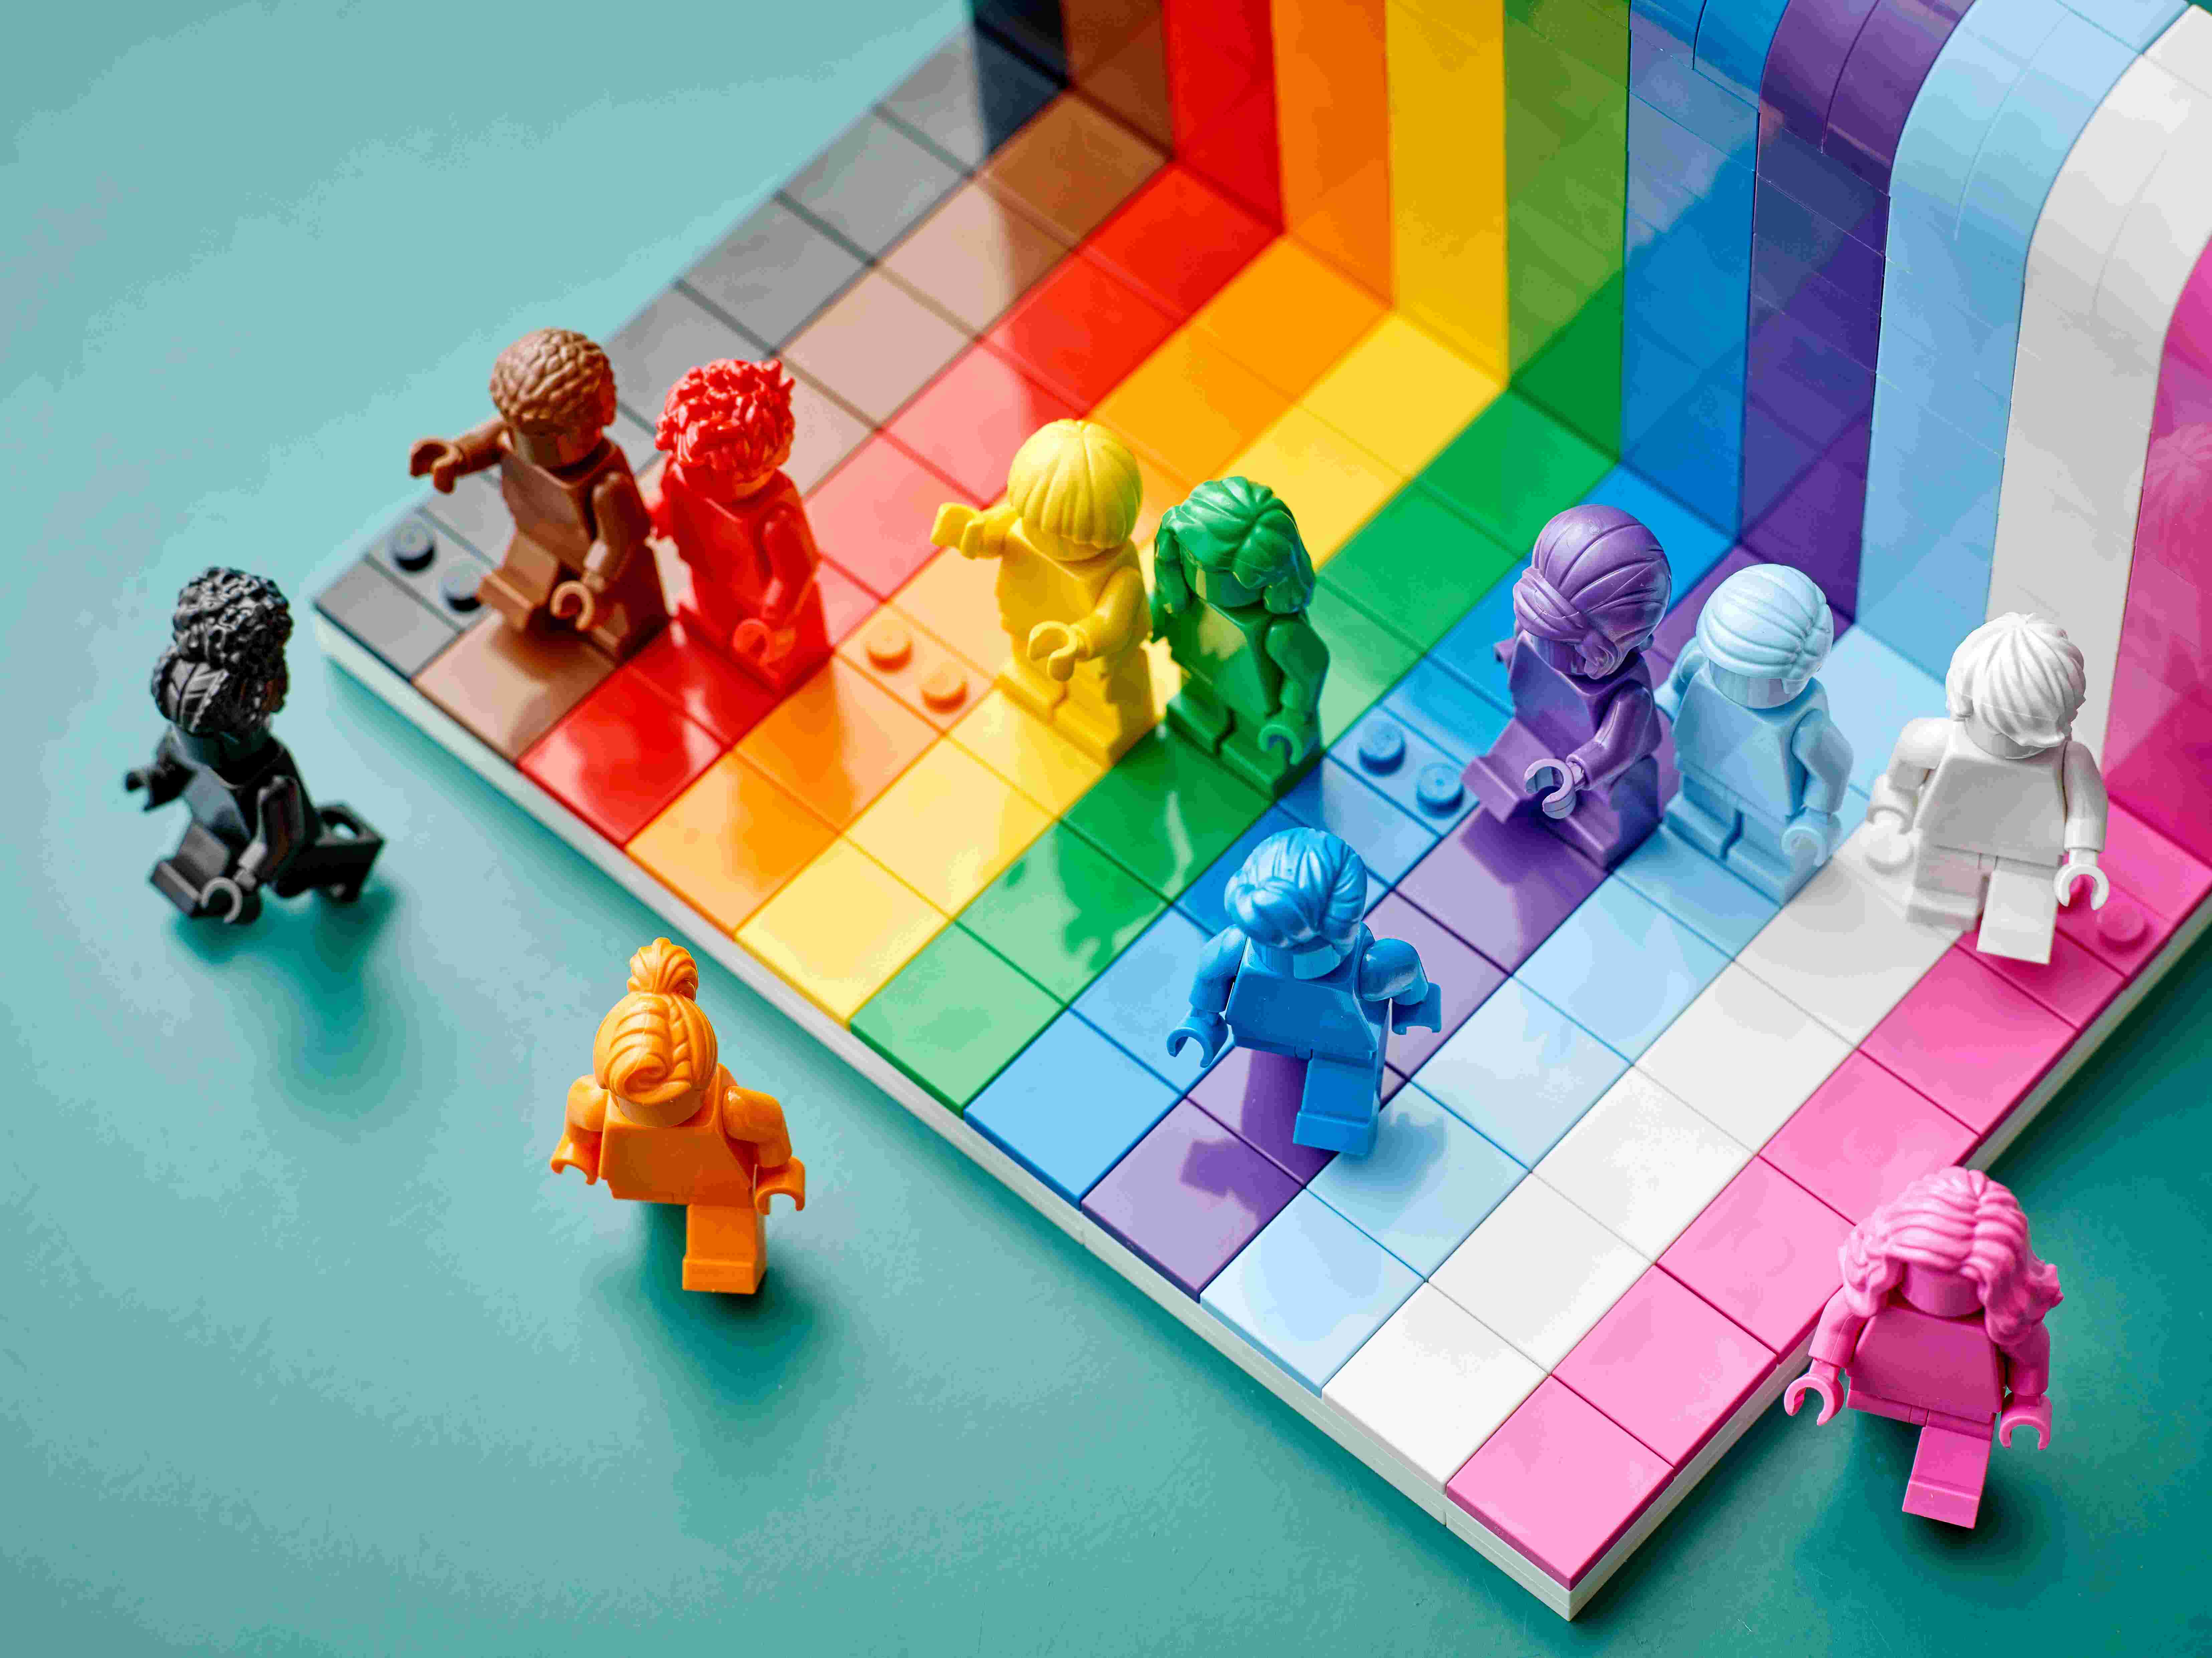 LEGO 40516 Jeder ist besonders